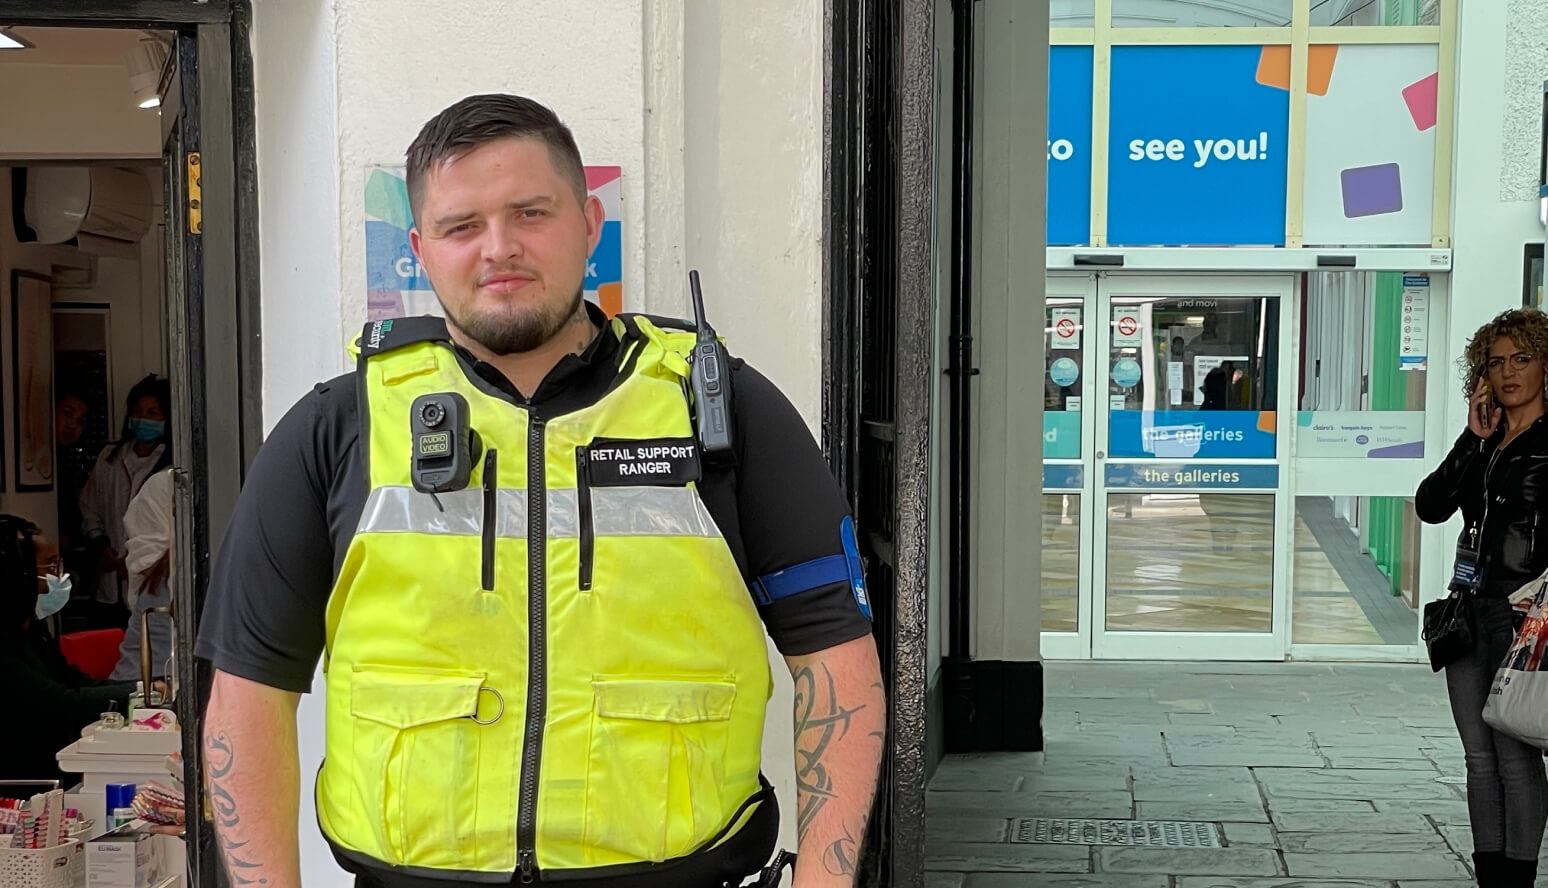 Local police Ranger in shopping centre